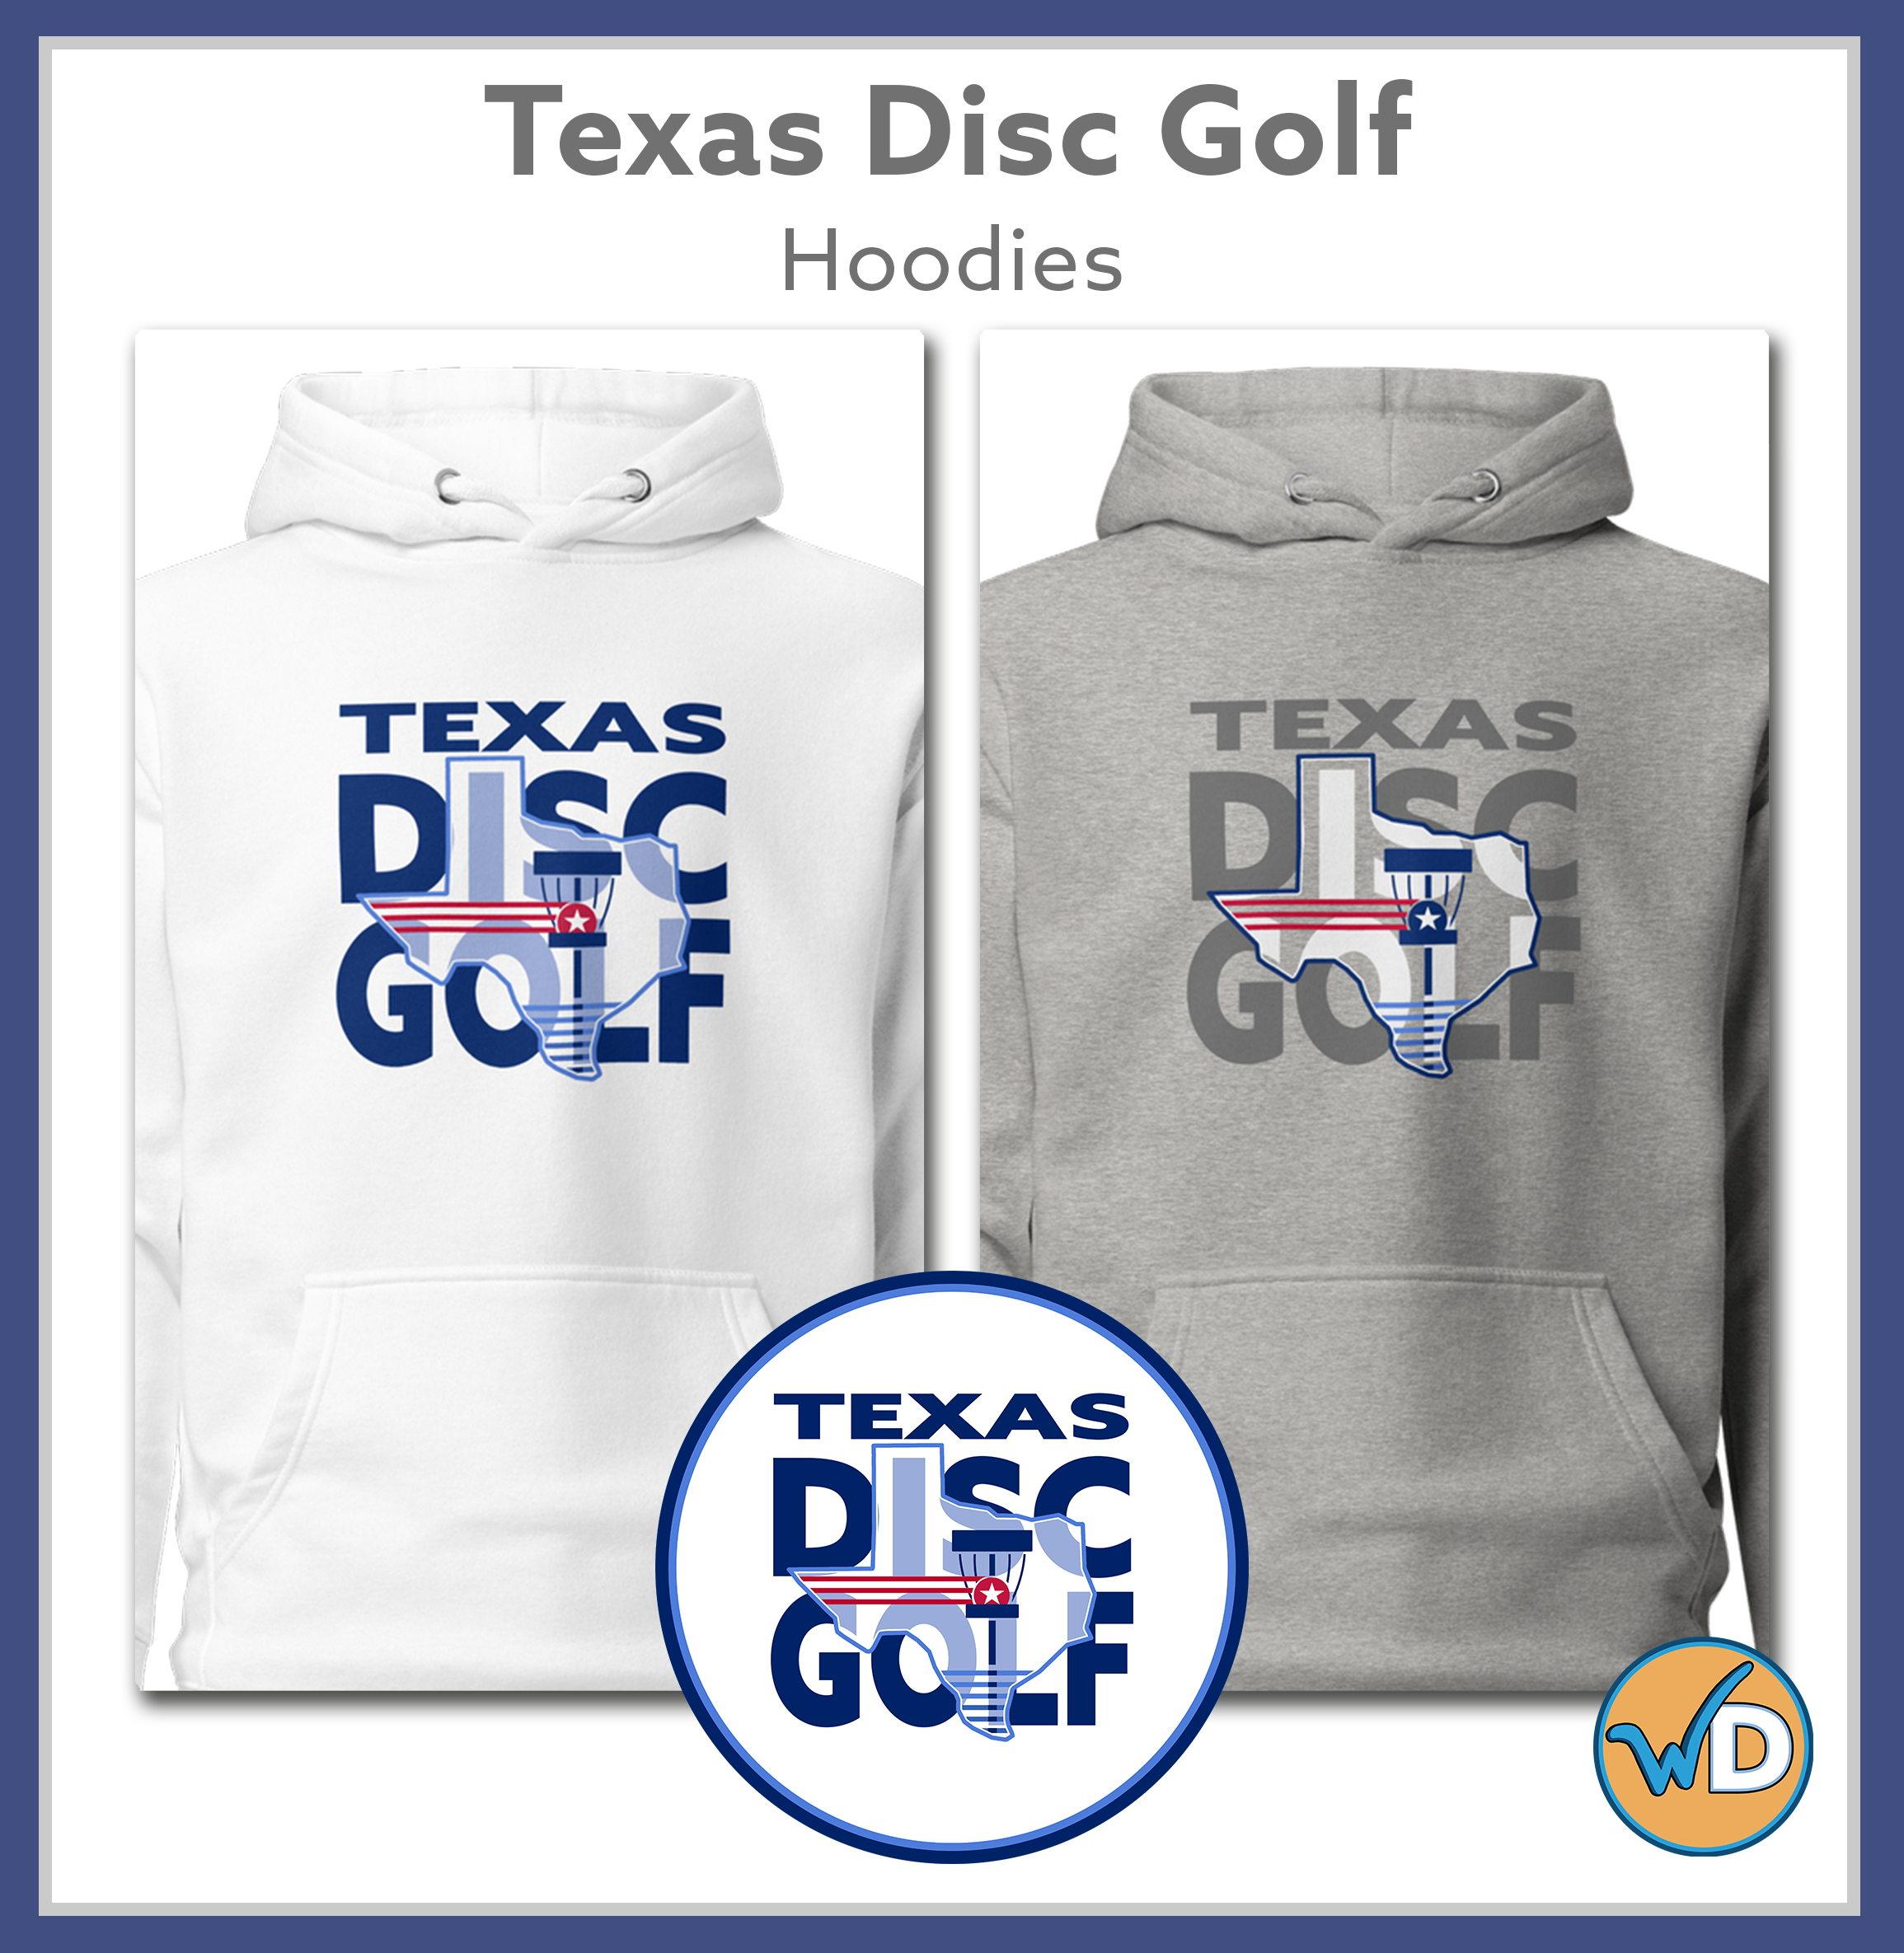 Texas Disc Golf Hoodies